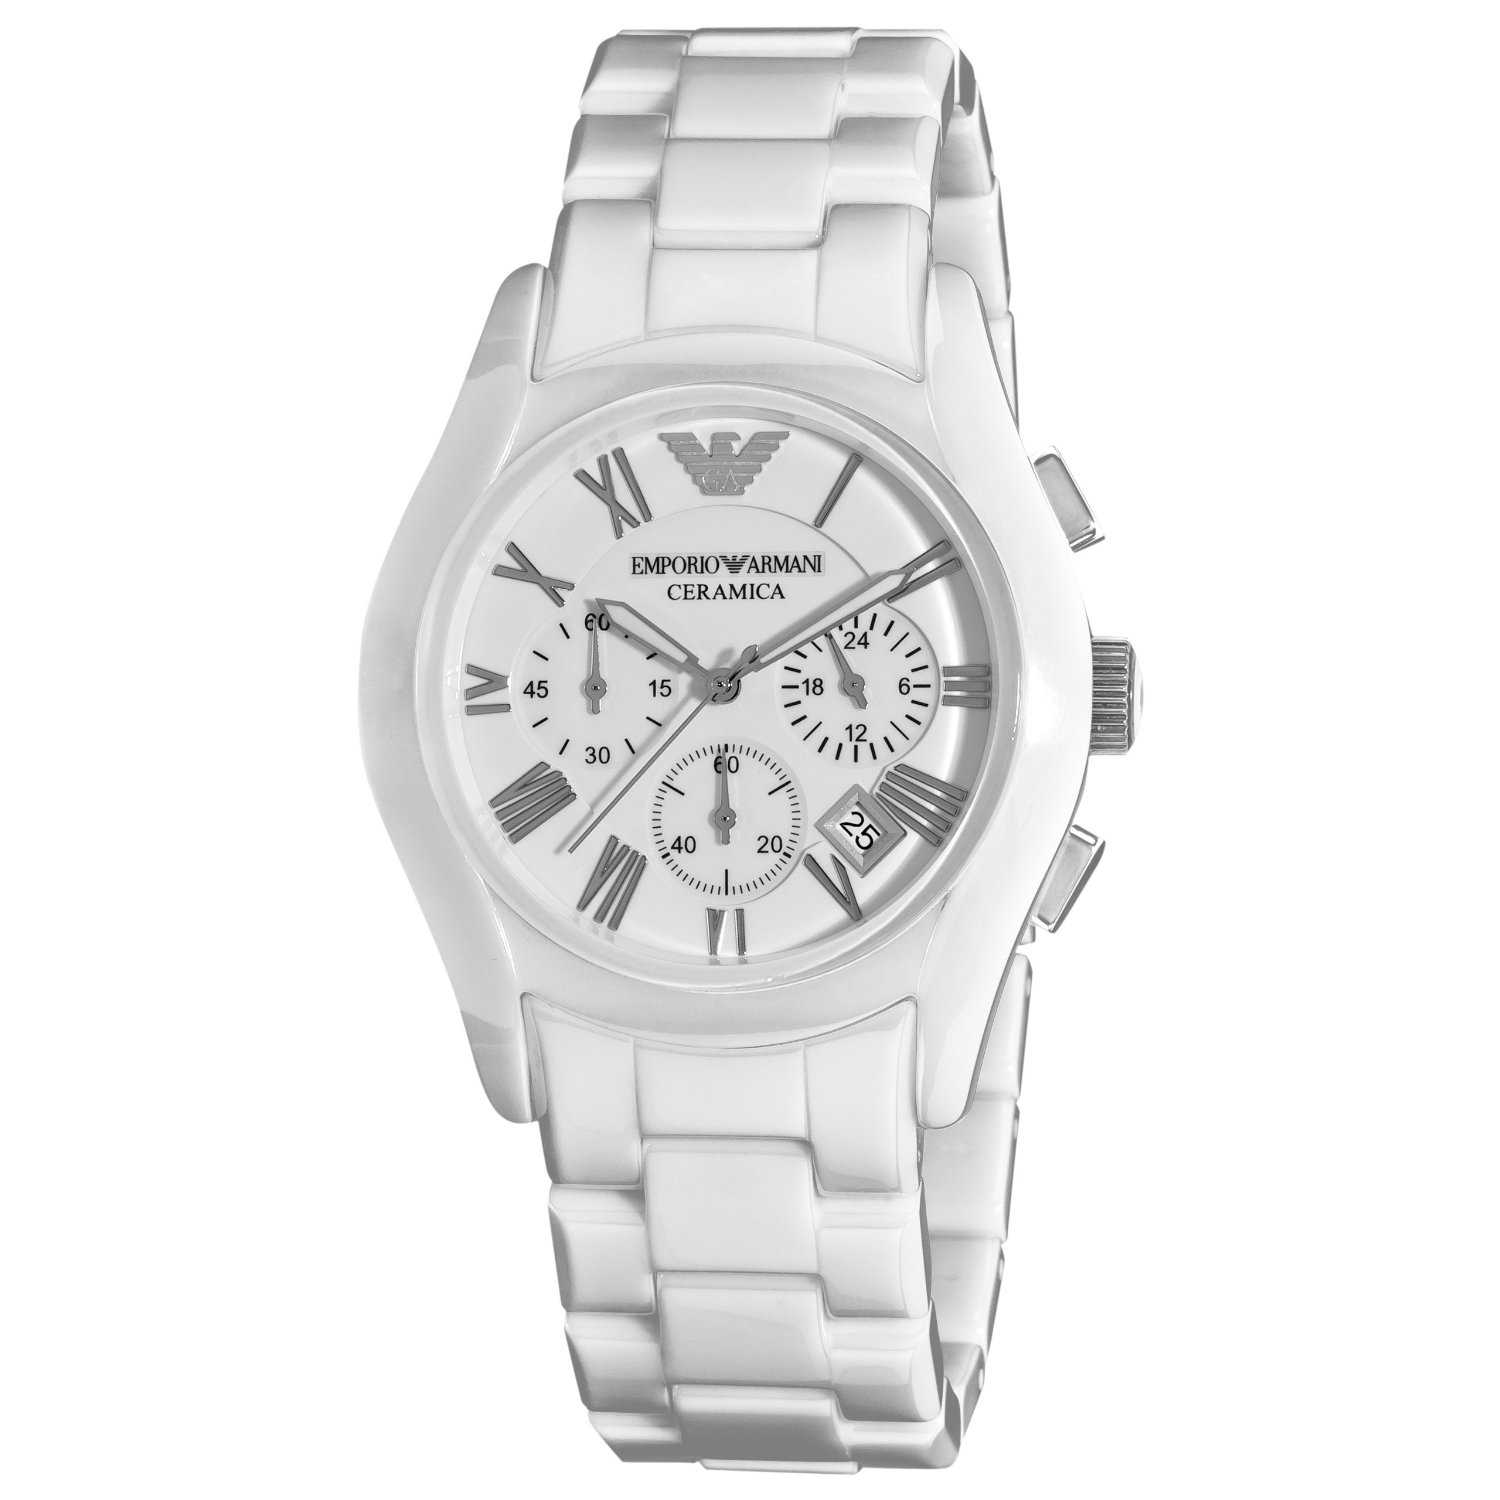 Emporio Armani女式白瓷手錶 $180.00免運費